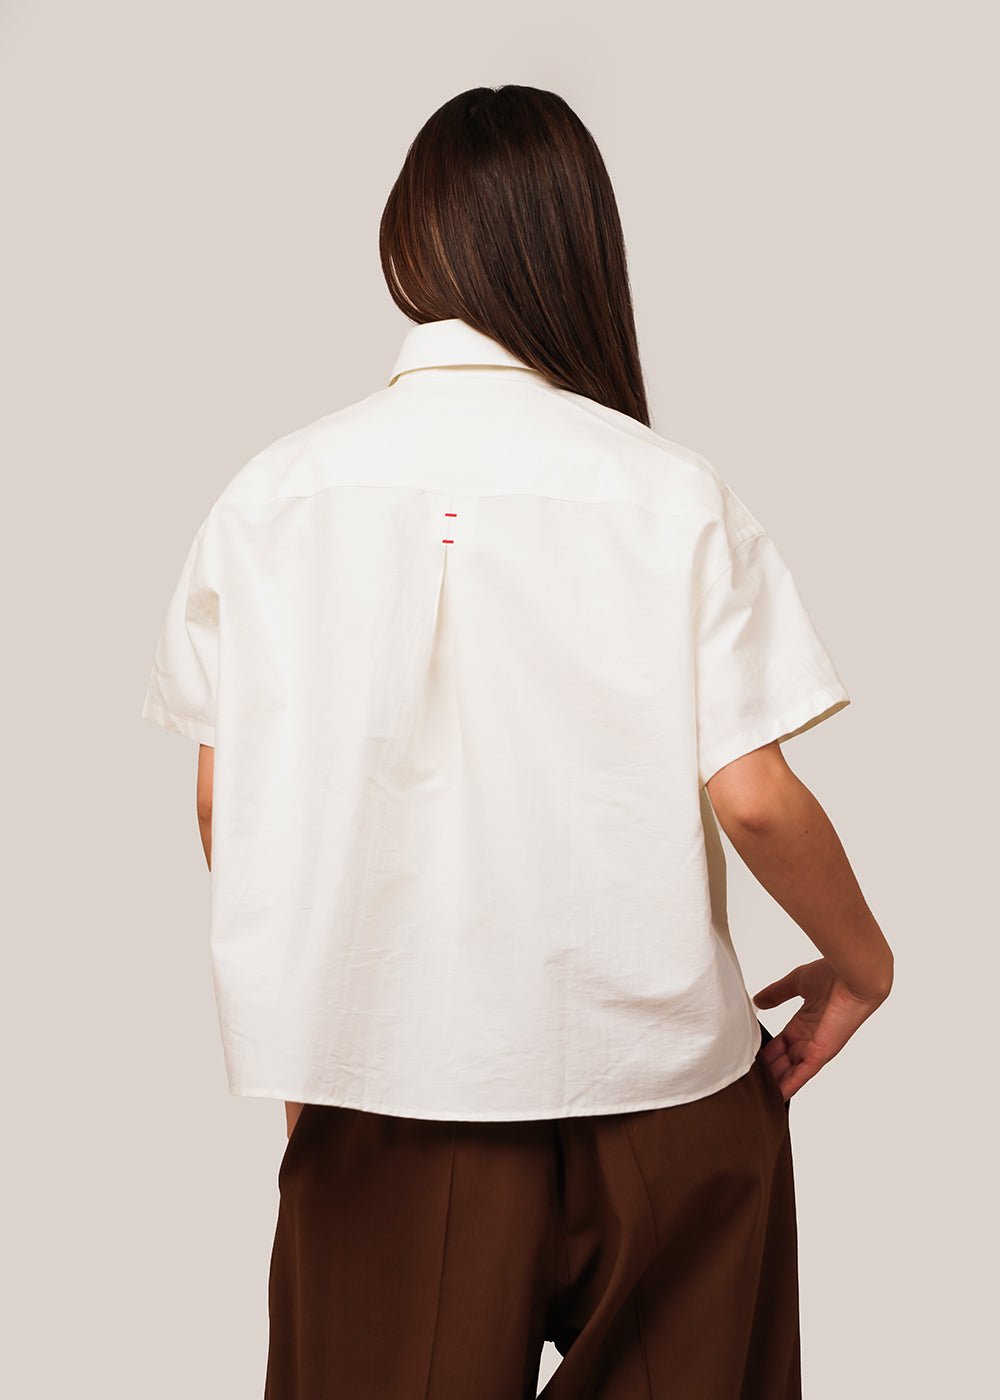 Cordera White Cropped Shirt - New Classics Studios Sustainable Ethical Fashion Canada